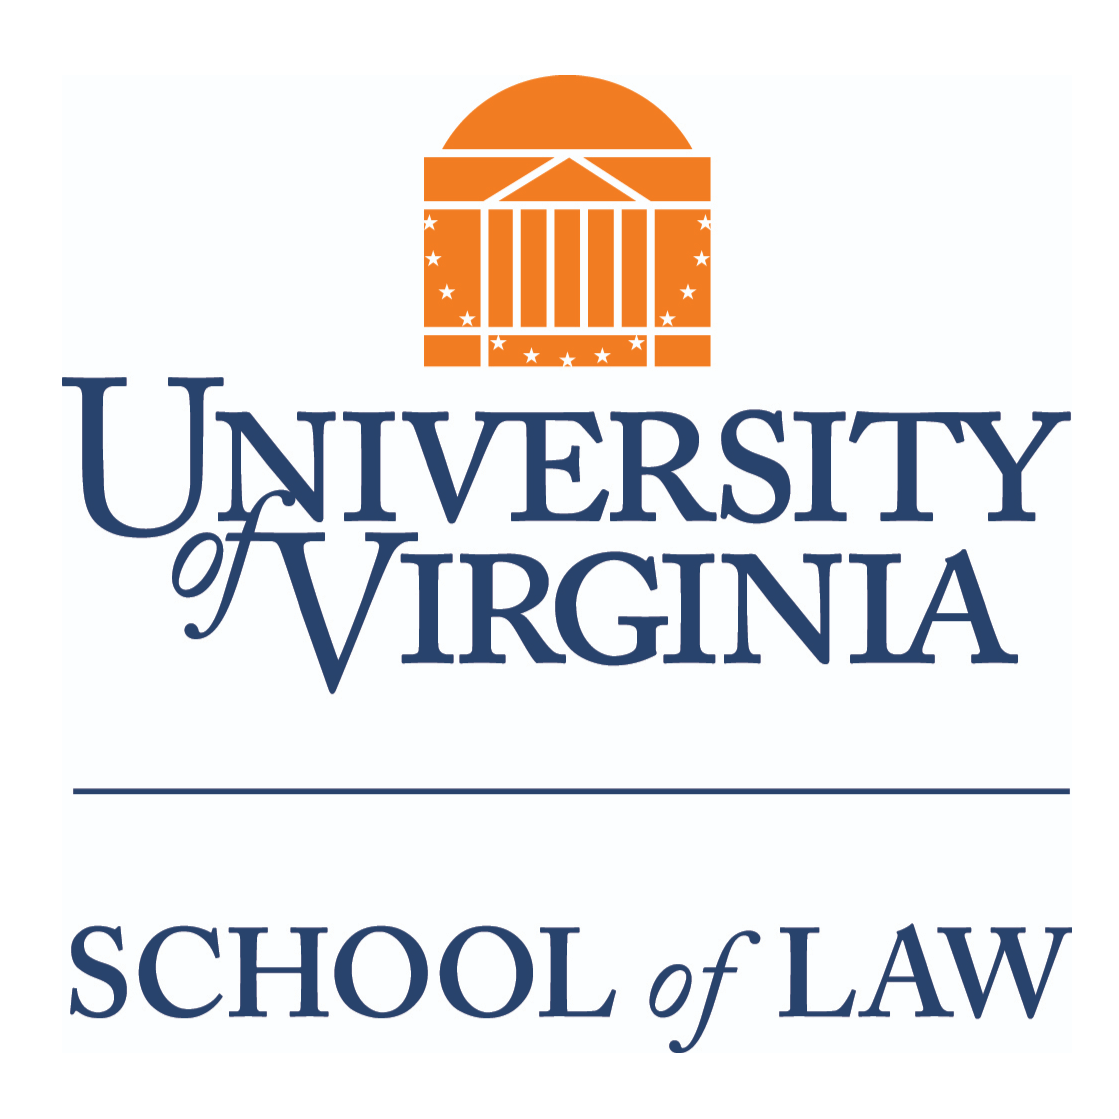 University of Virginia School of law logo